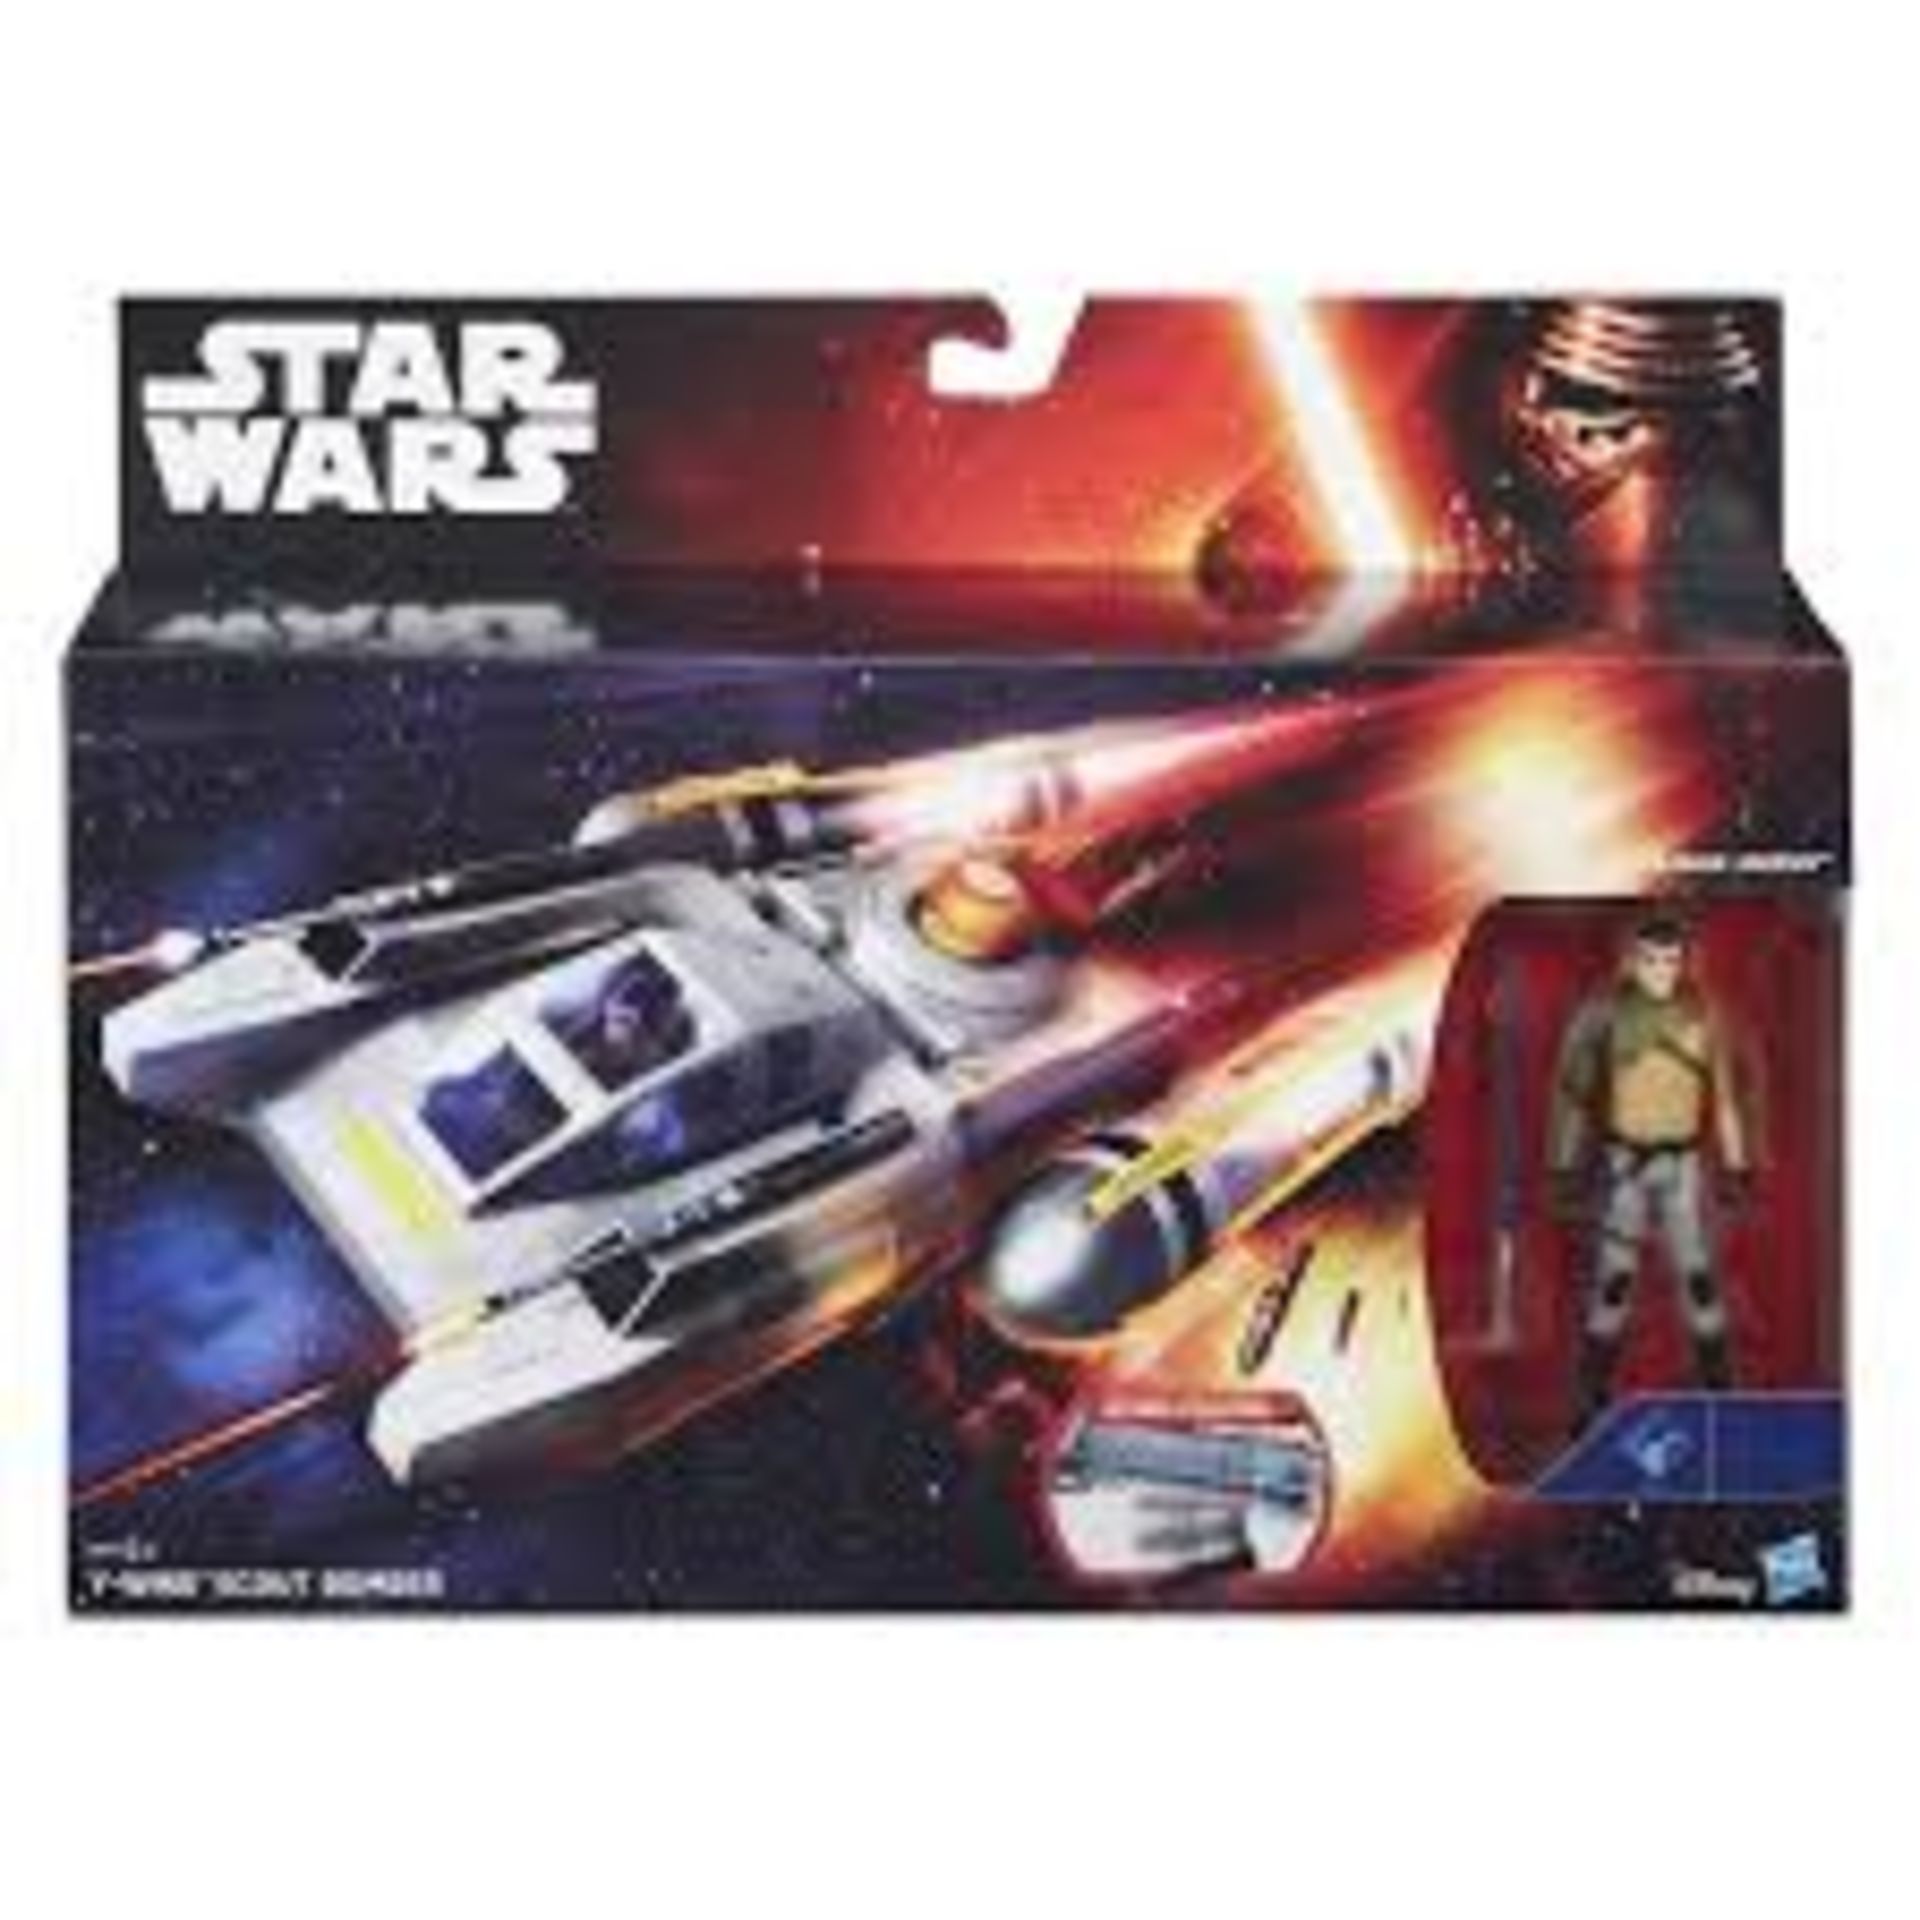 V *TRADE QTY* Brand New Hasbro Star Wars Rey's Speeder (Jakku) With Firing Missiles eBay £29.95 X - Image 2 of 2